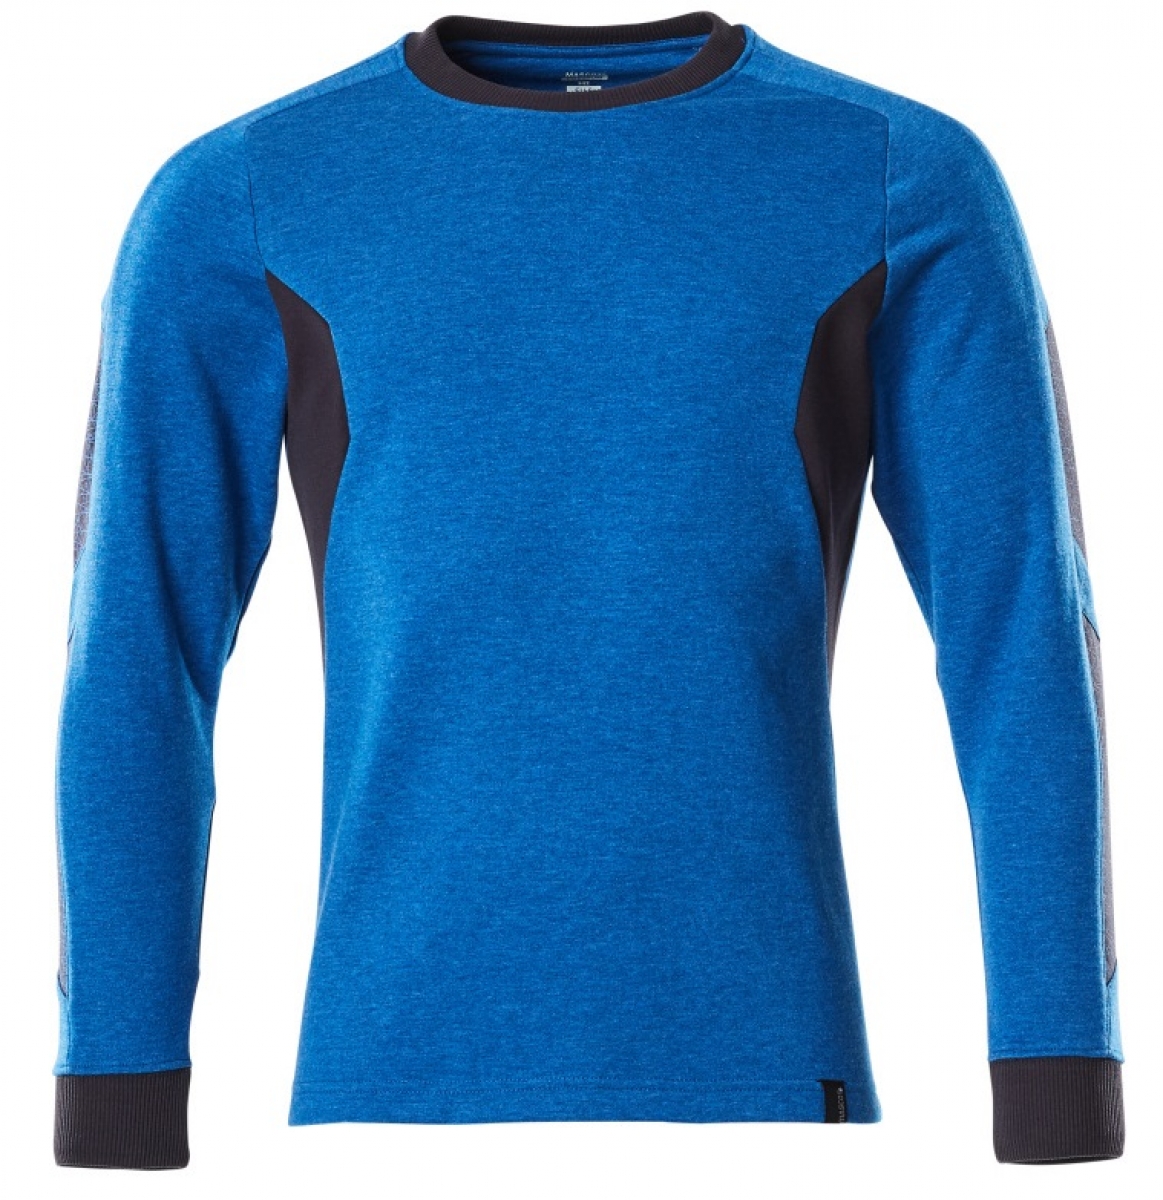 MASCOT-Worker-Shirts, Sweatshirt, 310 g/m, azurblau/schwarzblau